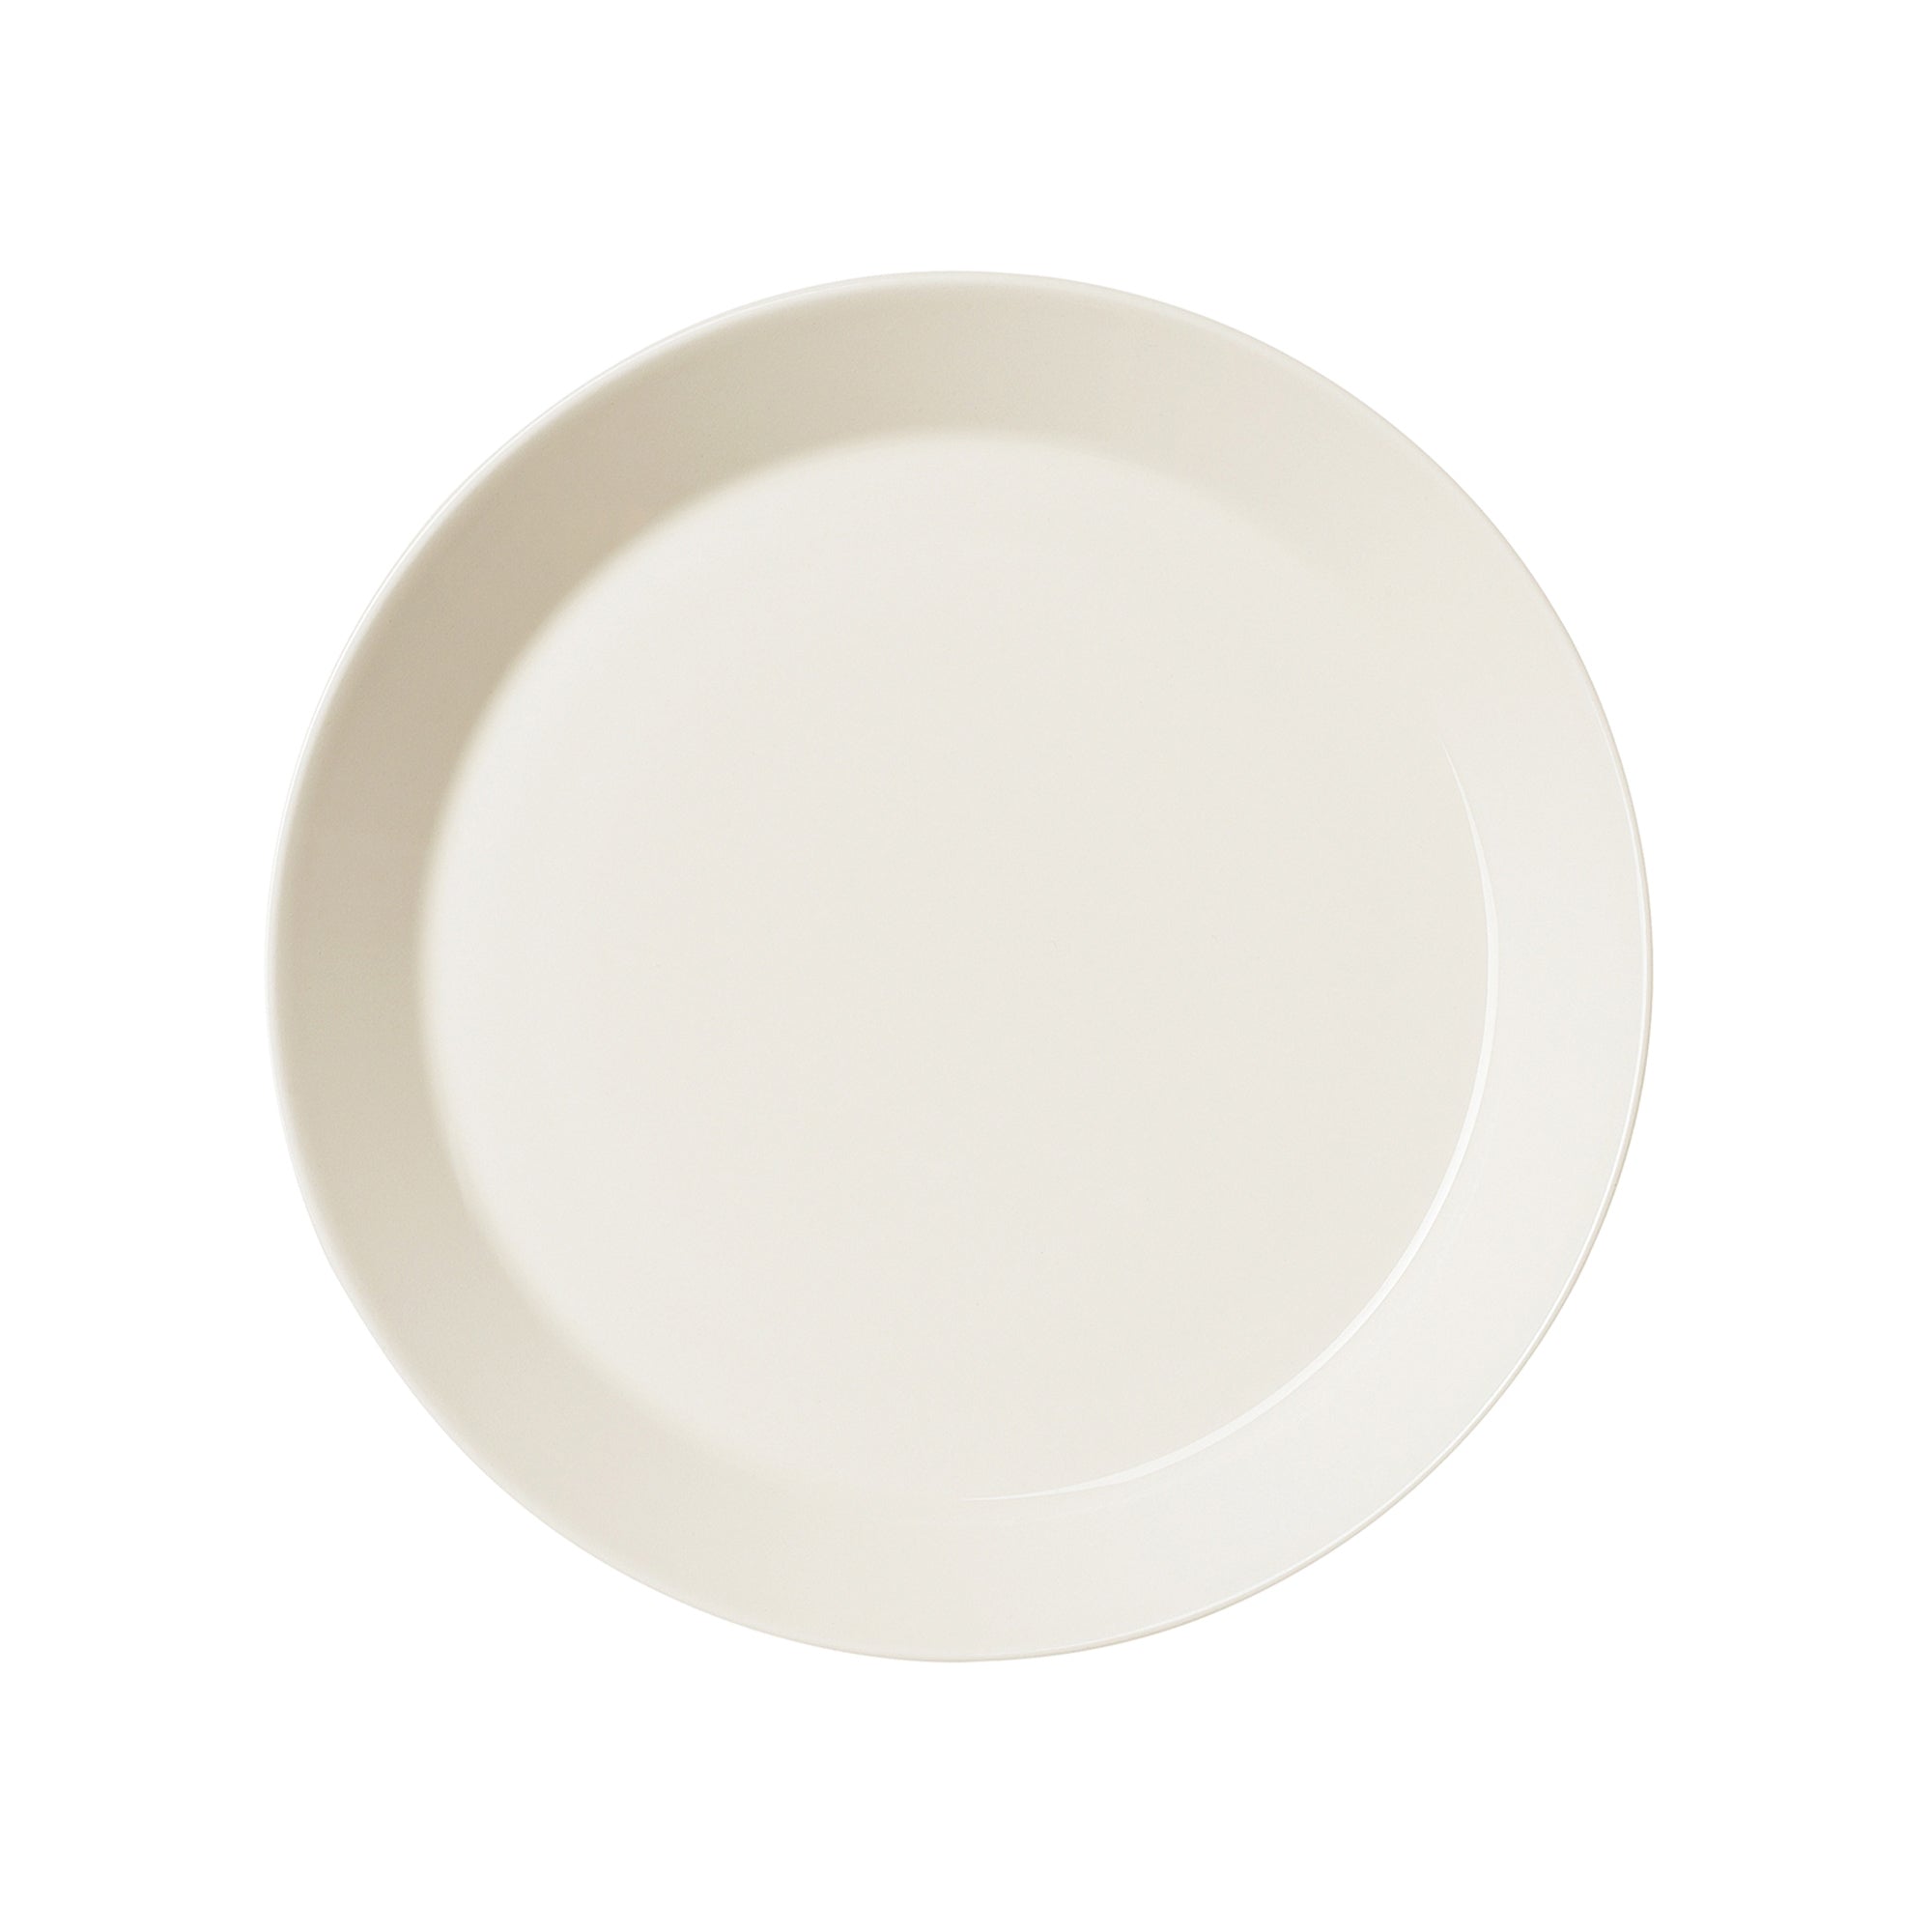 Teema White Dinner Plate, 10.25"